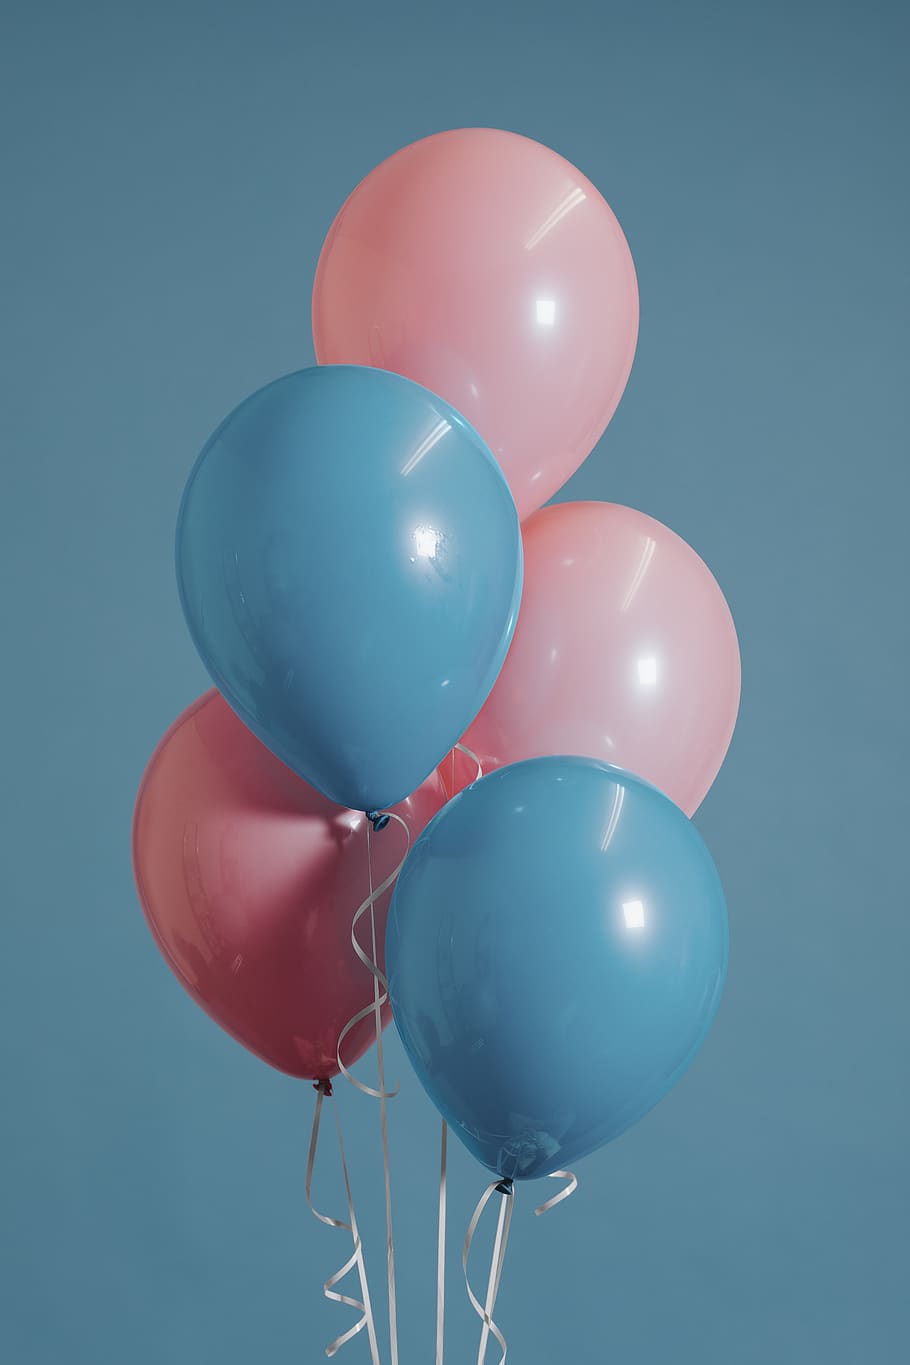 air, anniversary, baby blue, baby pink, baby shower, balloon, cute wallpaper, helium balloon, blue, celebration